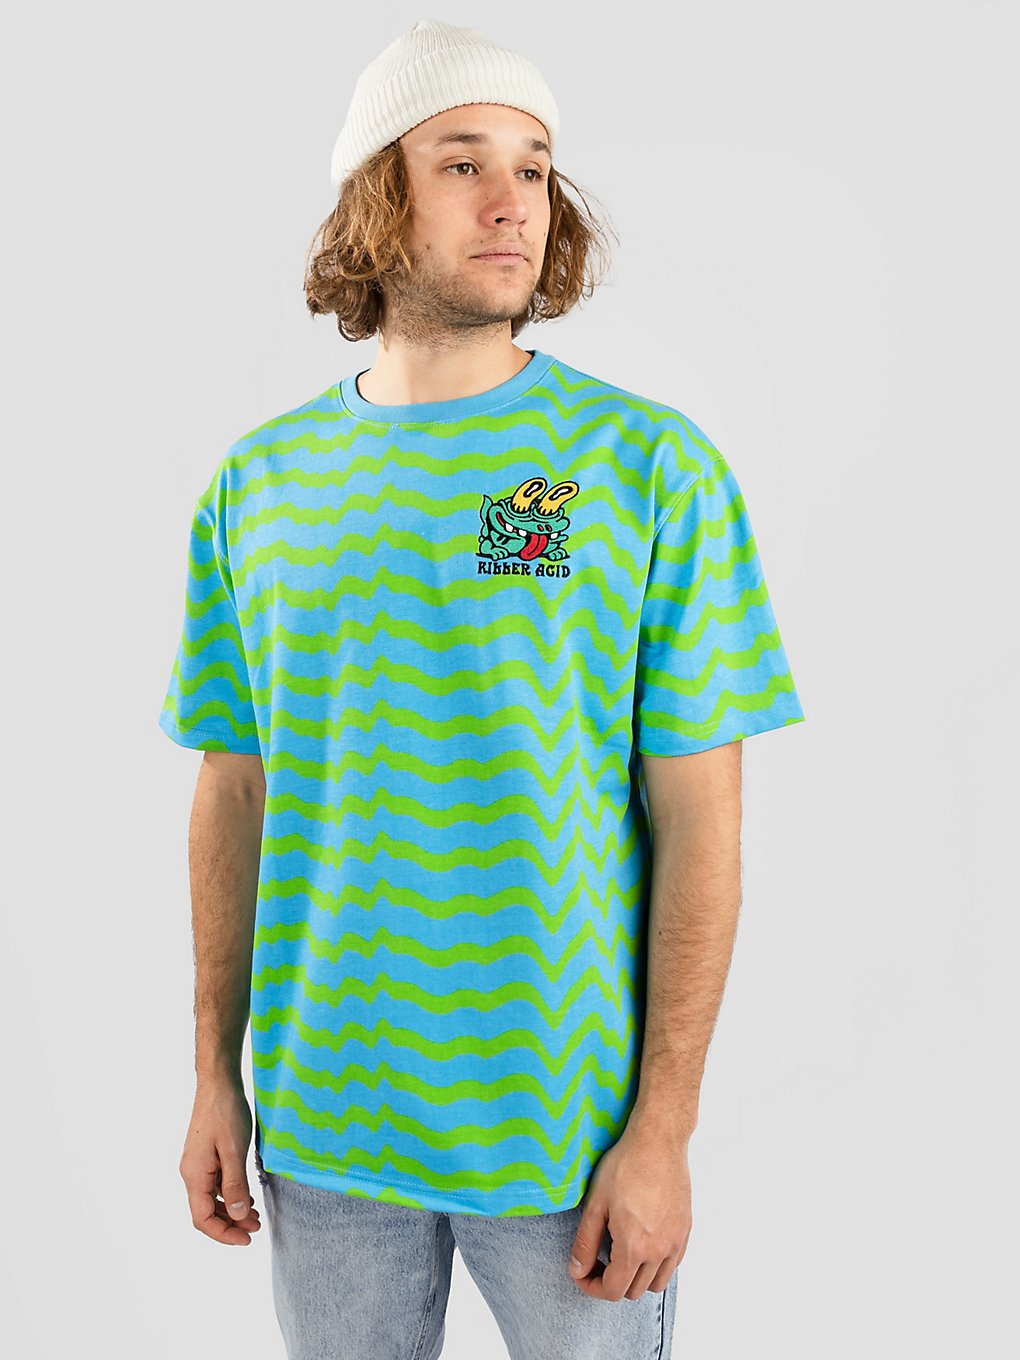 Killer Acid Wavy Stripe Frog T-Shirt groen